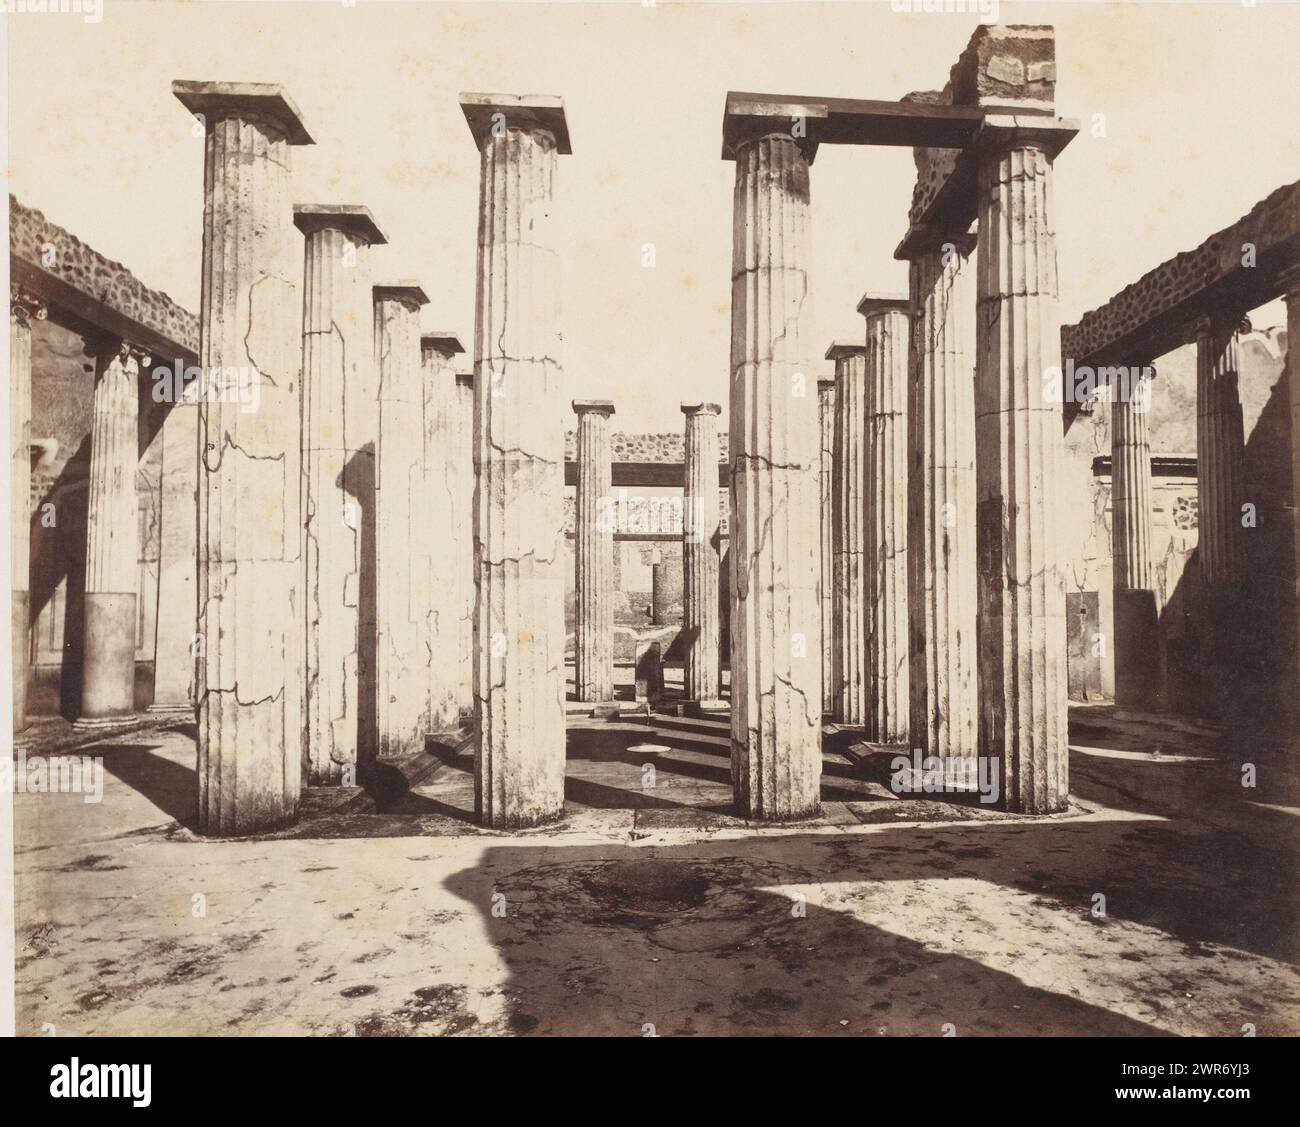 Remains of Mario Epidio Sabini's house in Pompeii, Italy, anonymous, Pompeii, 1851 - 1900, cardboard, albumen print, height 305 mm × width 401 mm, photograph Stock Photo